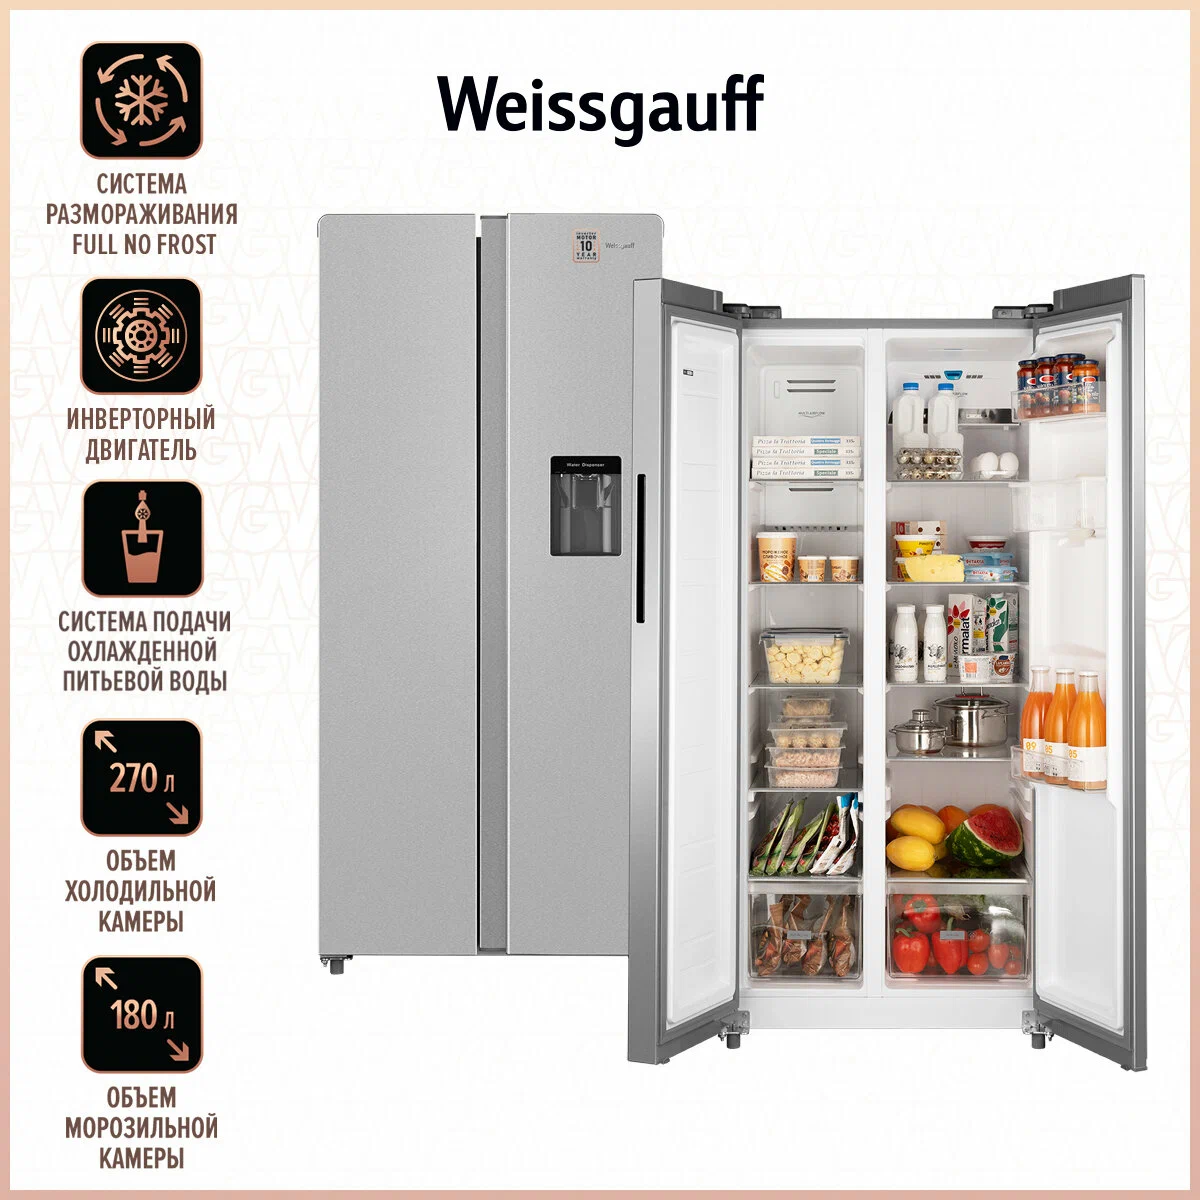 Холодильник Weissgauff WSBS 600 X серебристый холодильник weissgauff wsbs 600 синий